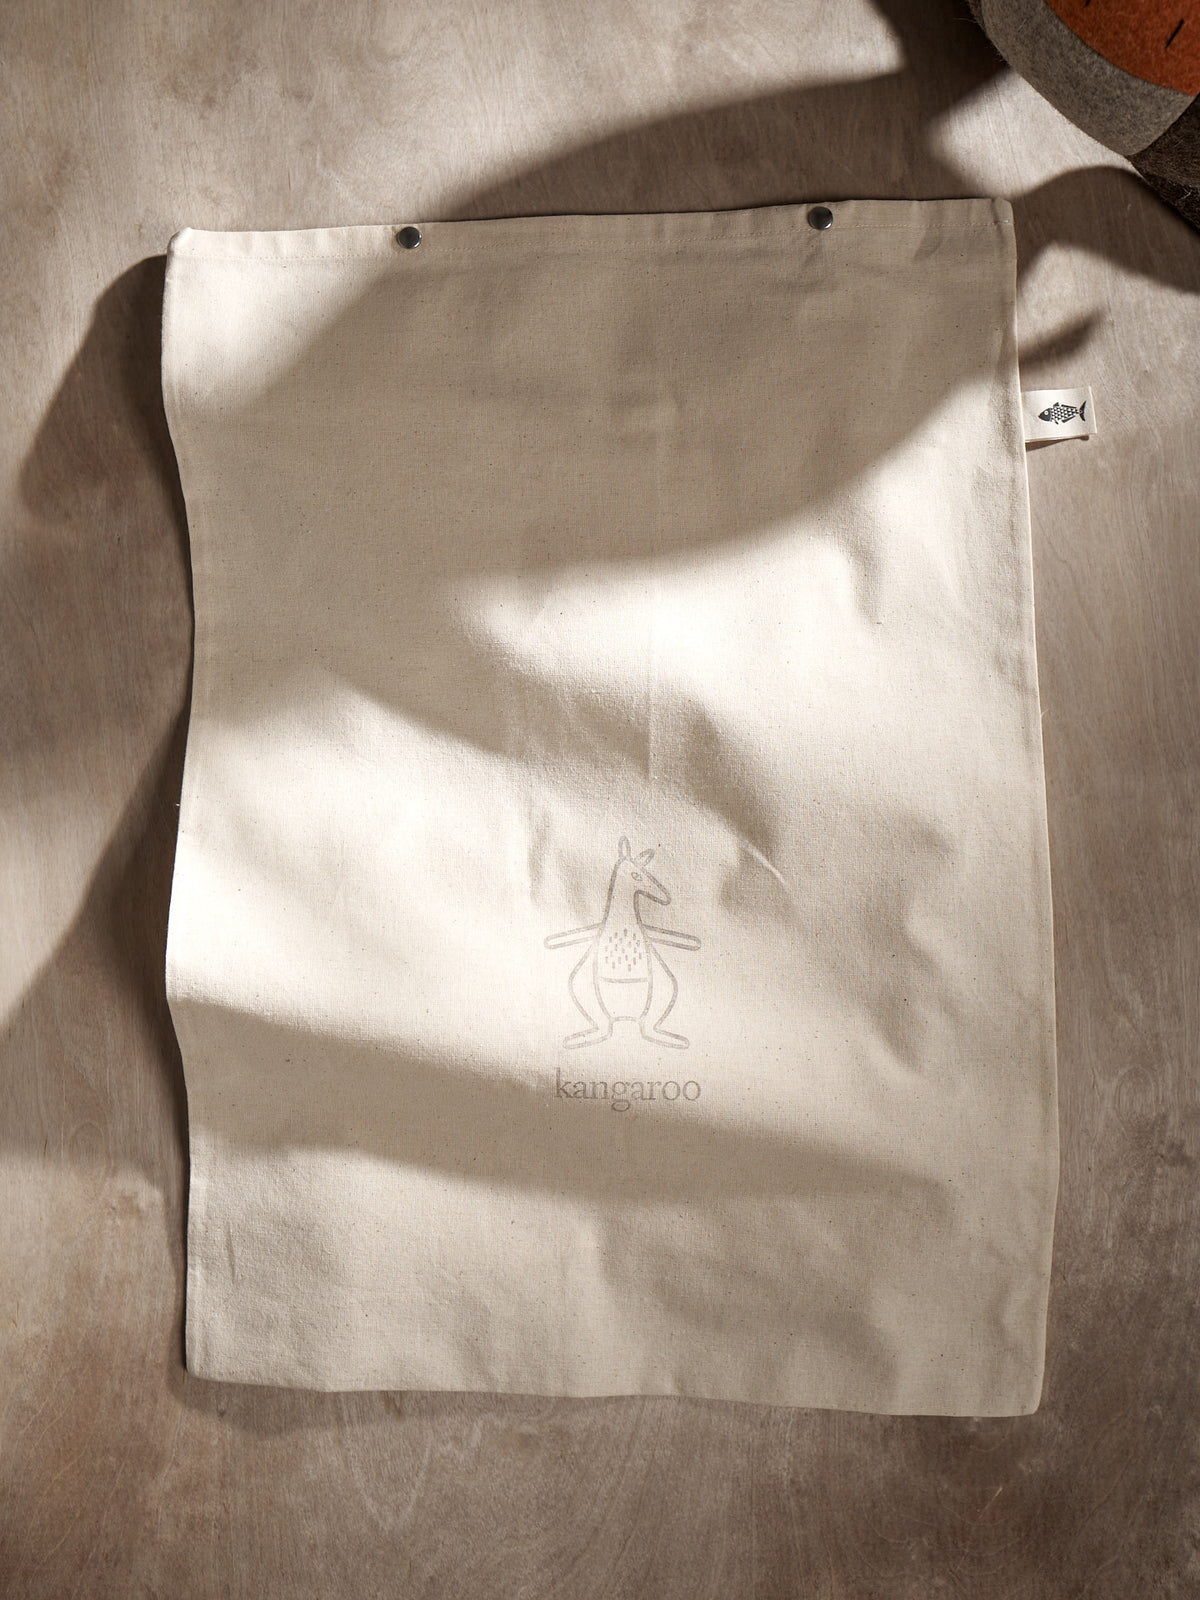 A JOE, the Kangaroo tote bag on a table next to a coffee cup. (Brand Name: Carapau)